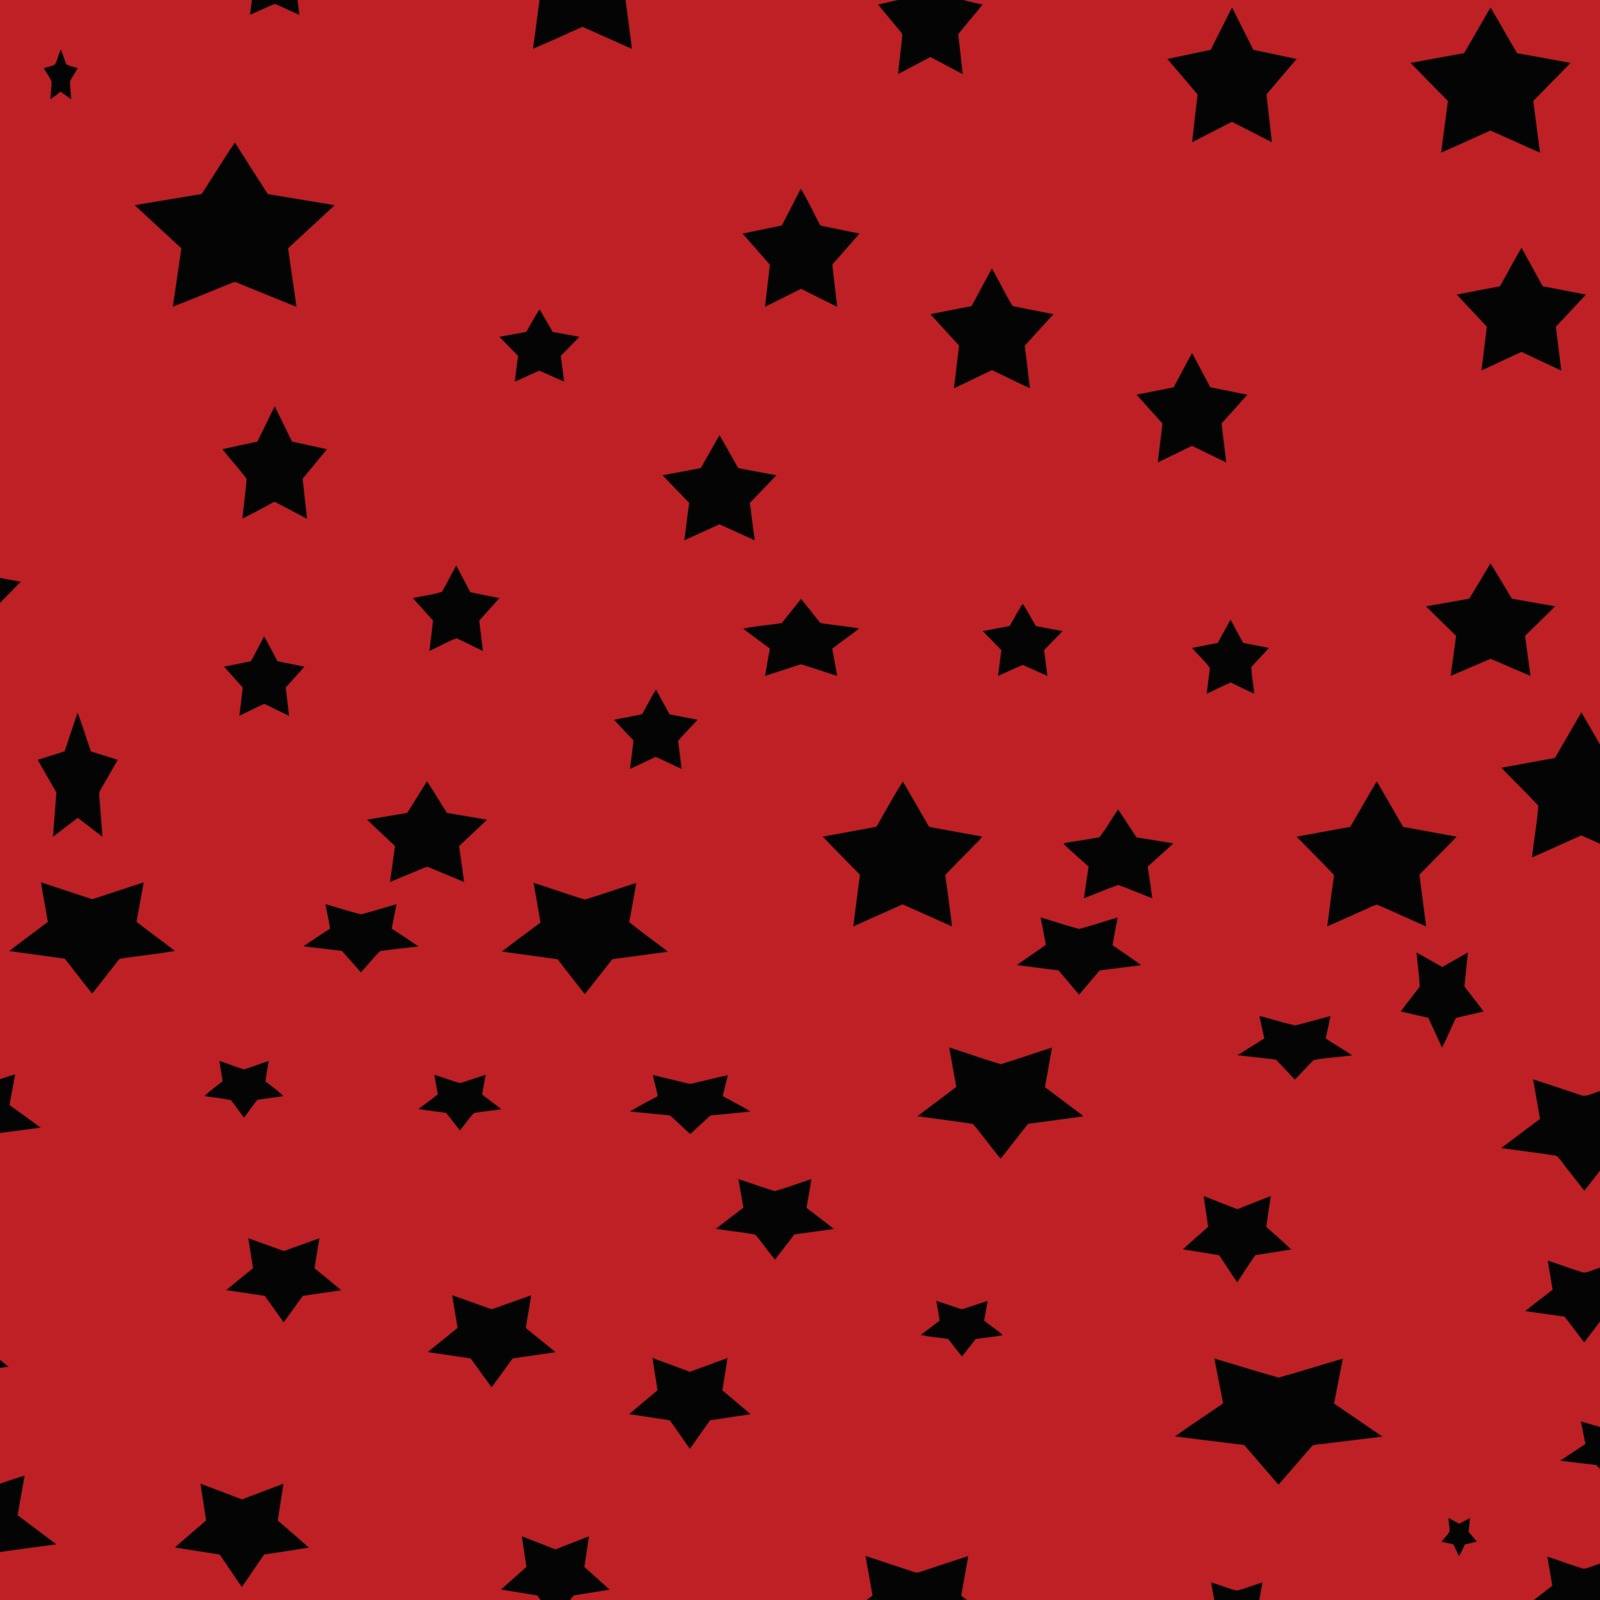 Black stars on red background